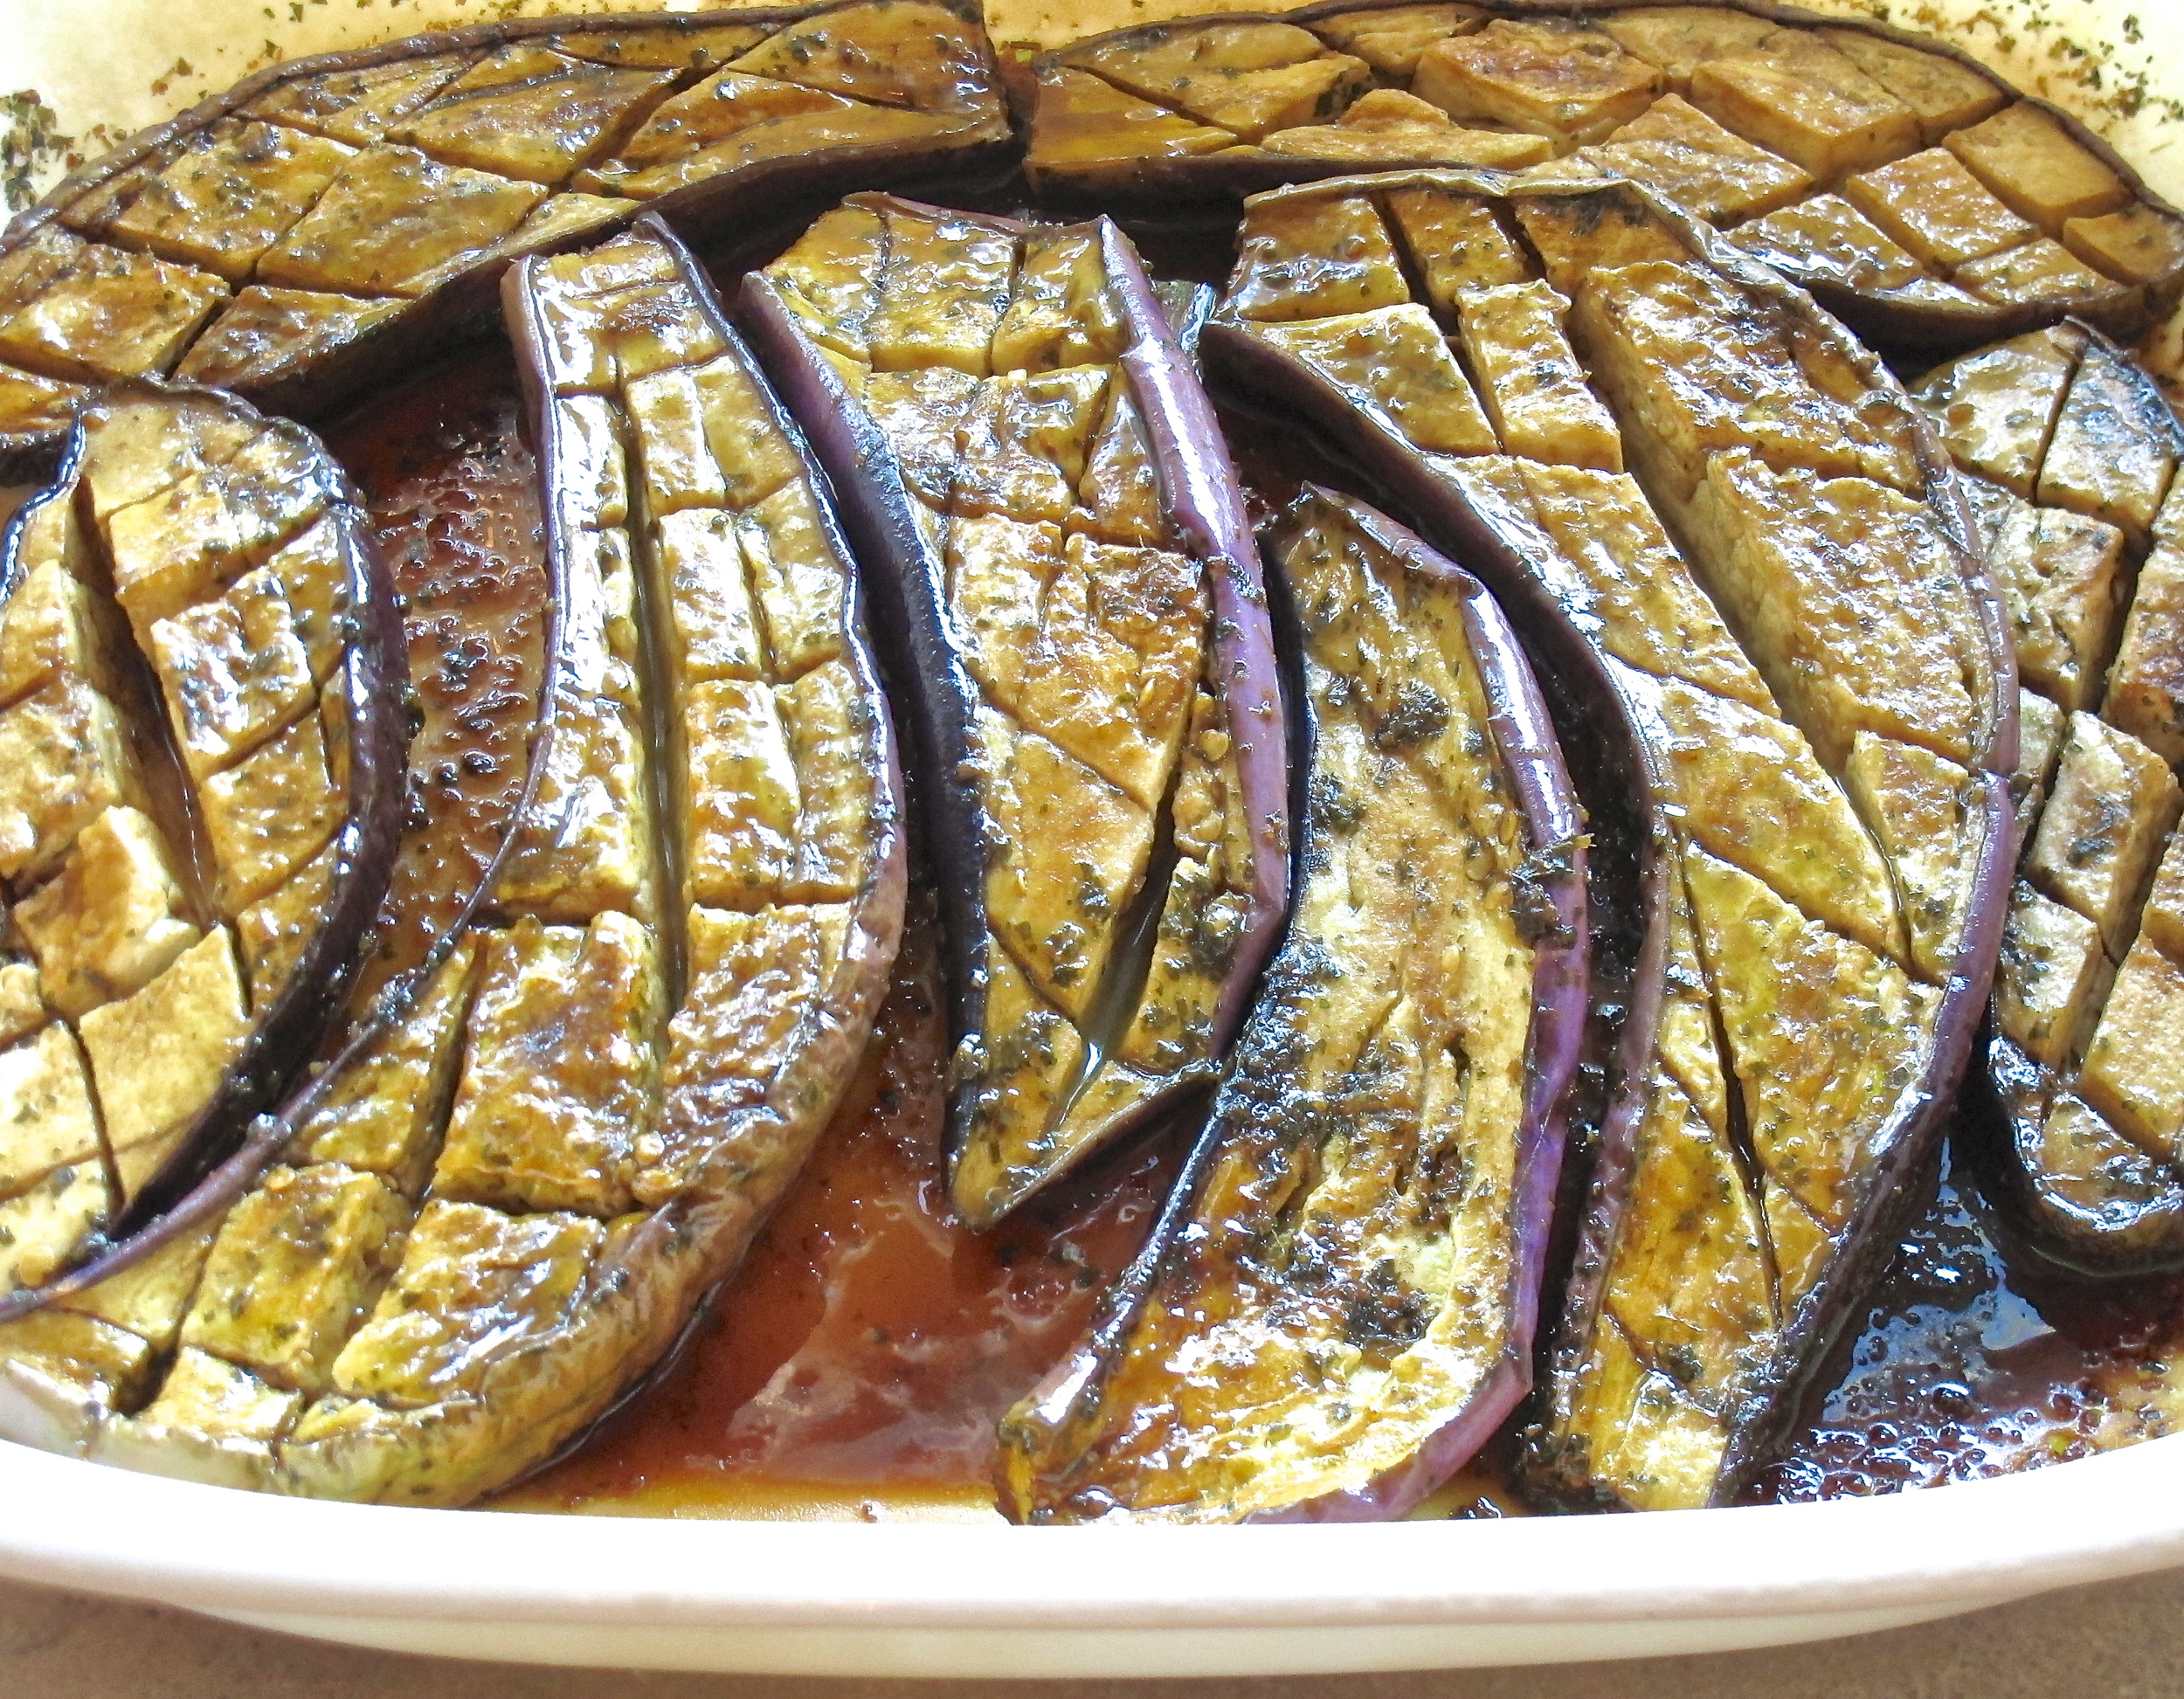 Microwaved Asian Eggplant Tasting Page